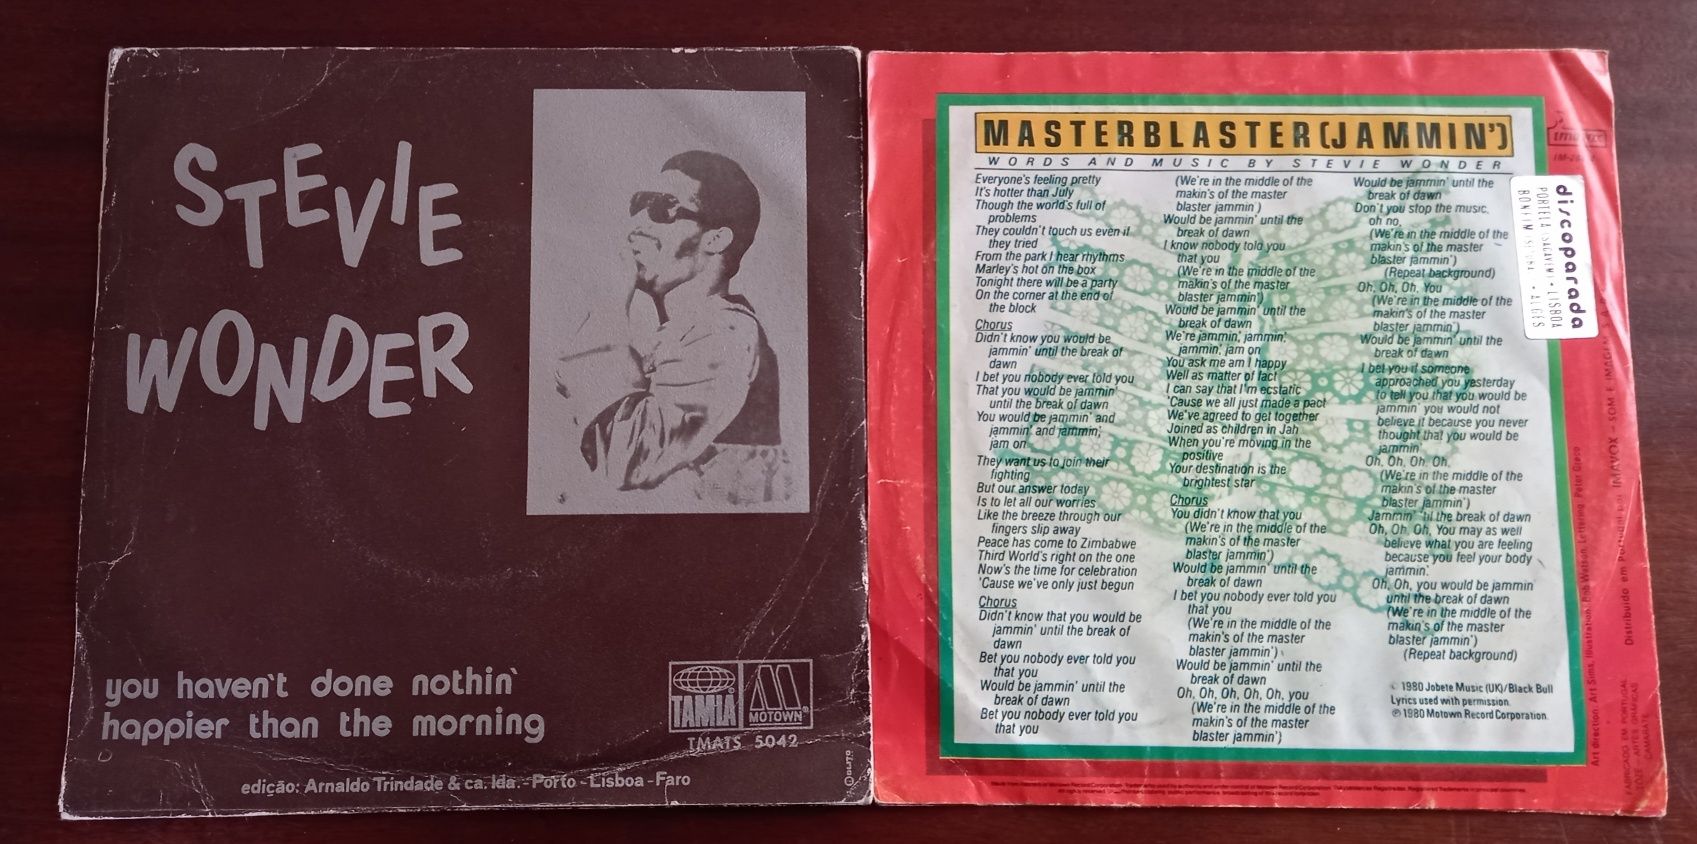 Stevie Wonder - Master Blaster e + outro single de 1972  Disco Motown